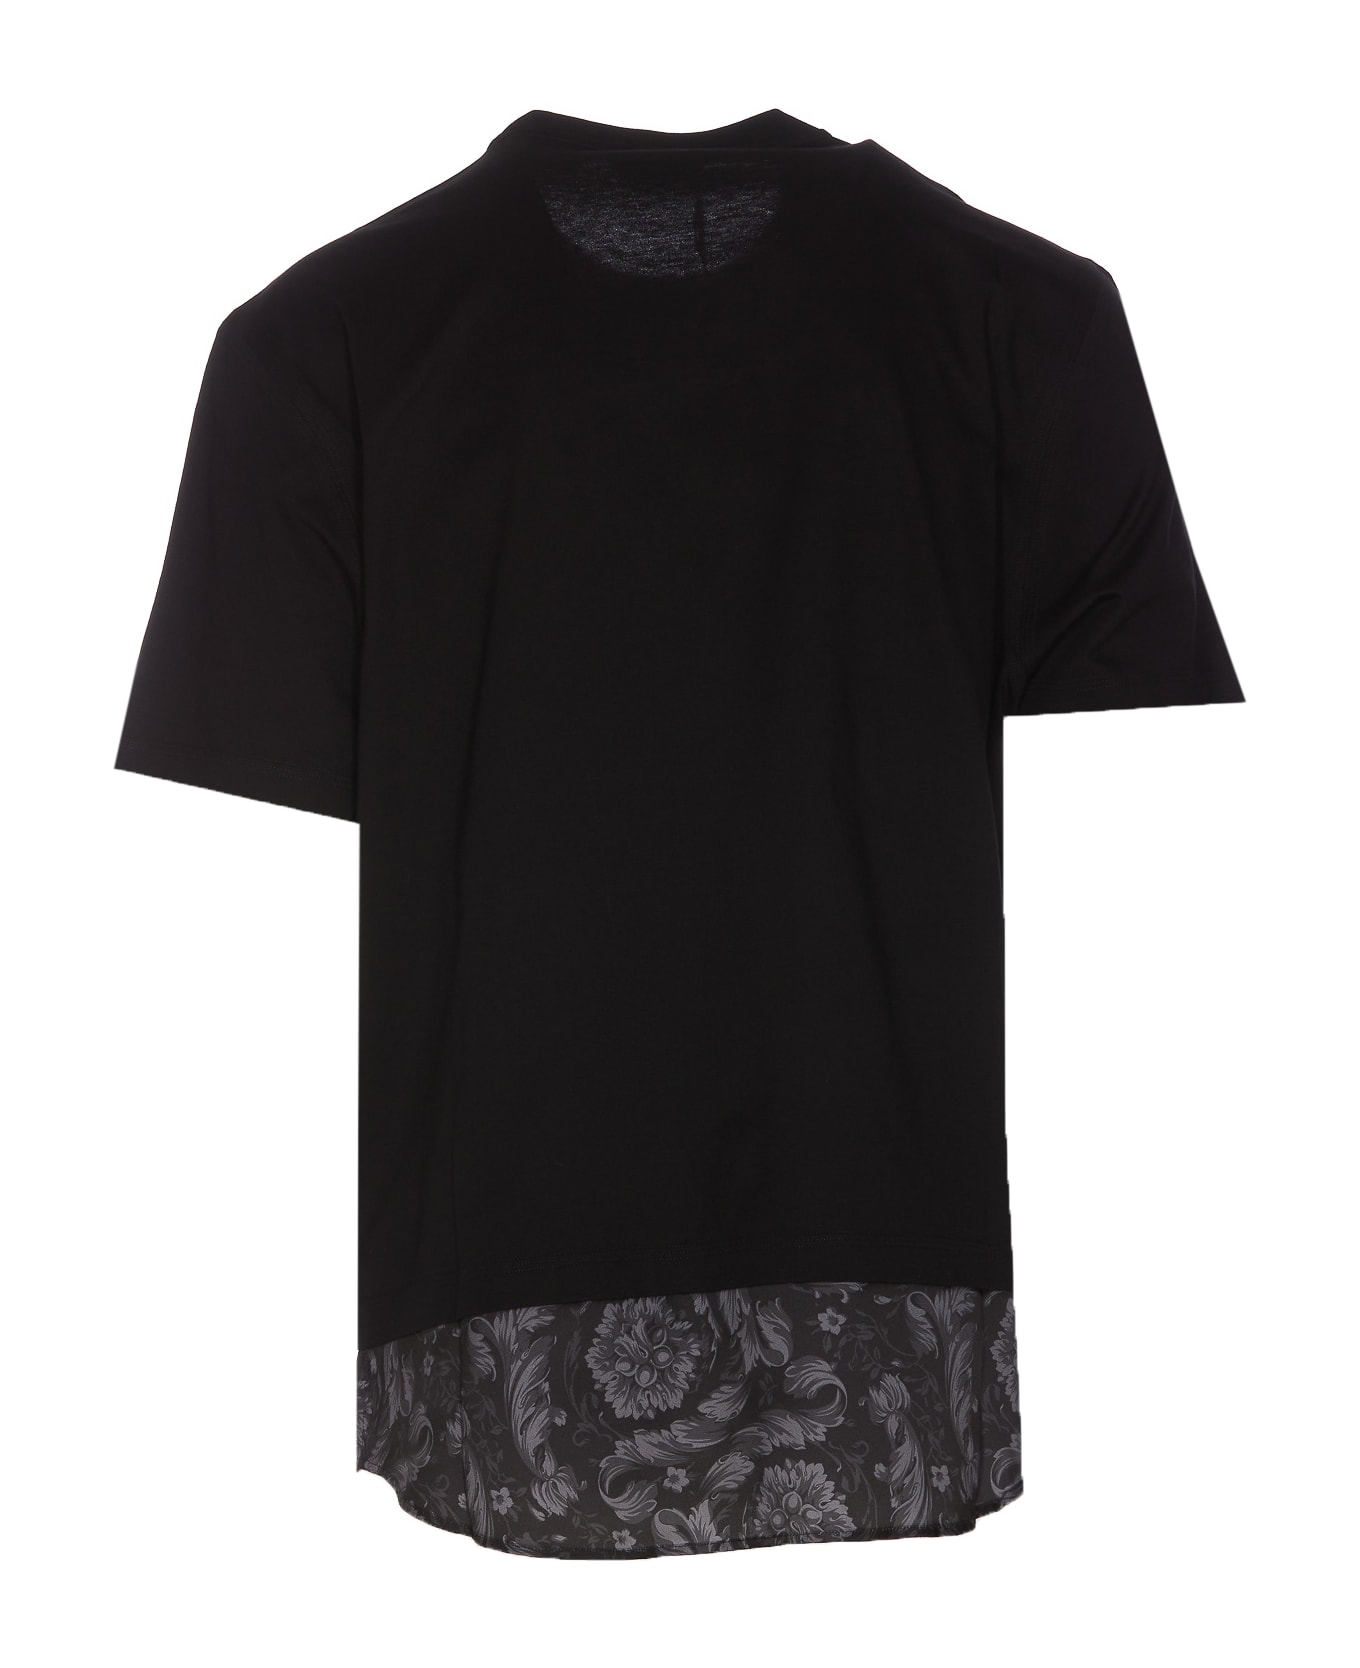 Versace Barocco Panel T-shirt - Black